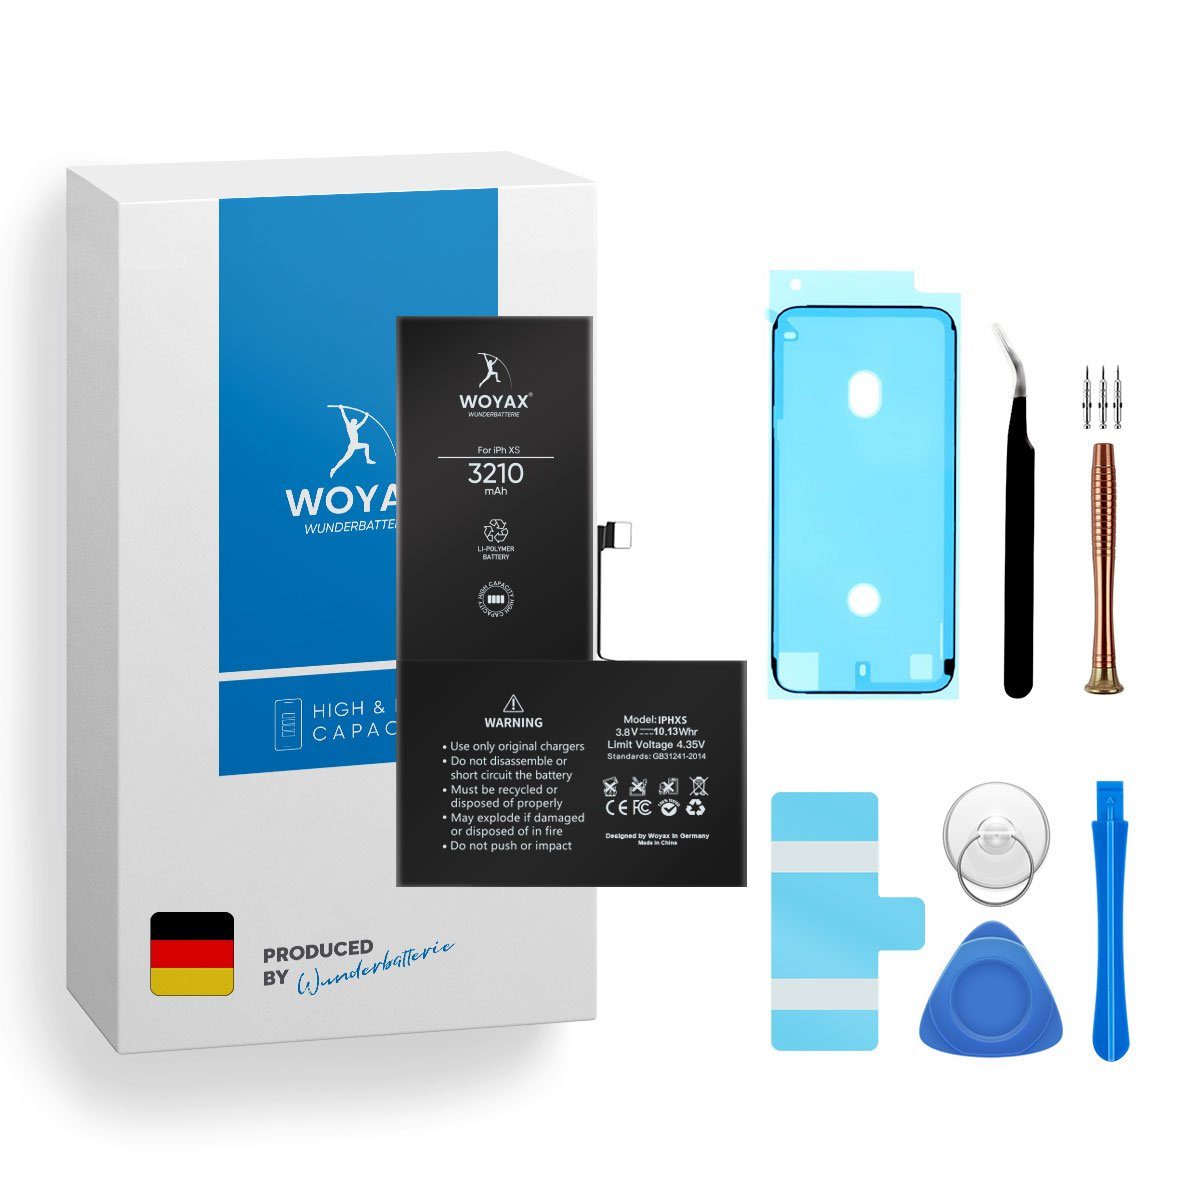 3210 Ersatzakku Hohe Handy-Akku Wunderbatterie Akku für XS iPhone mAh Kapazität Woyax